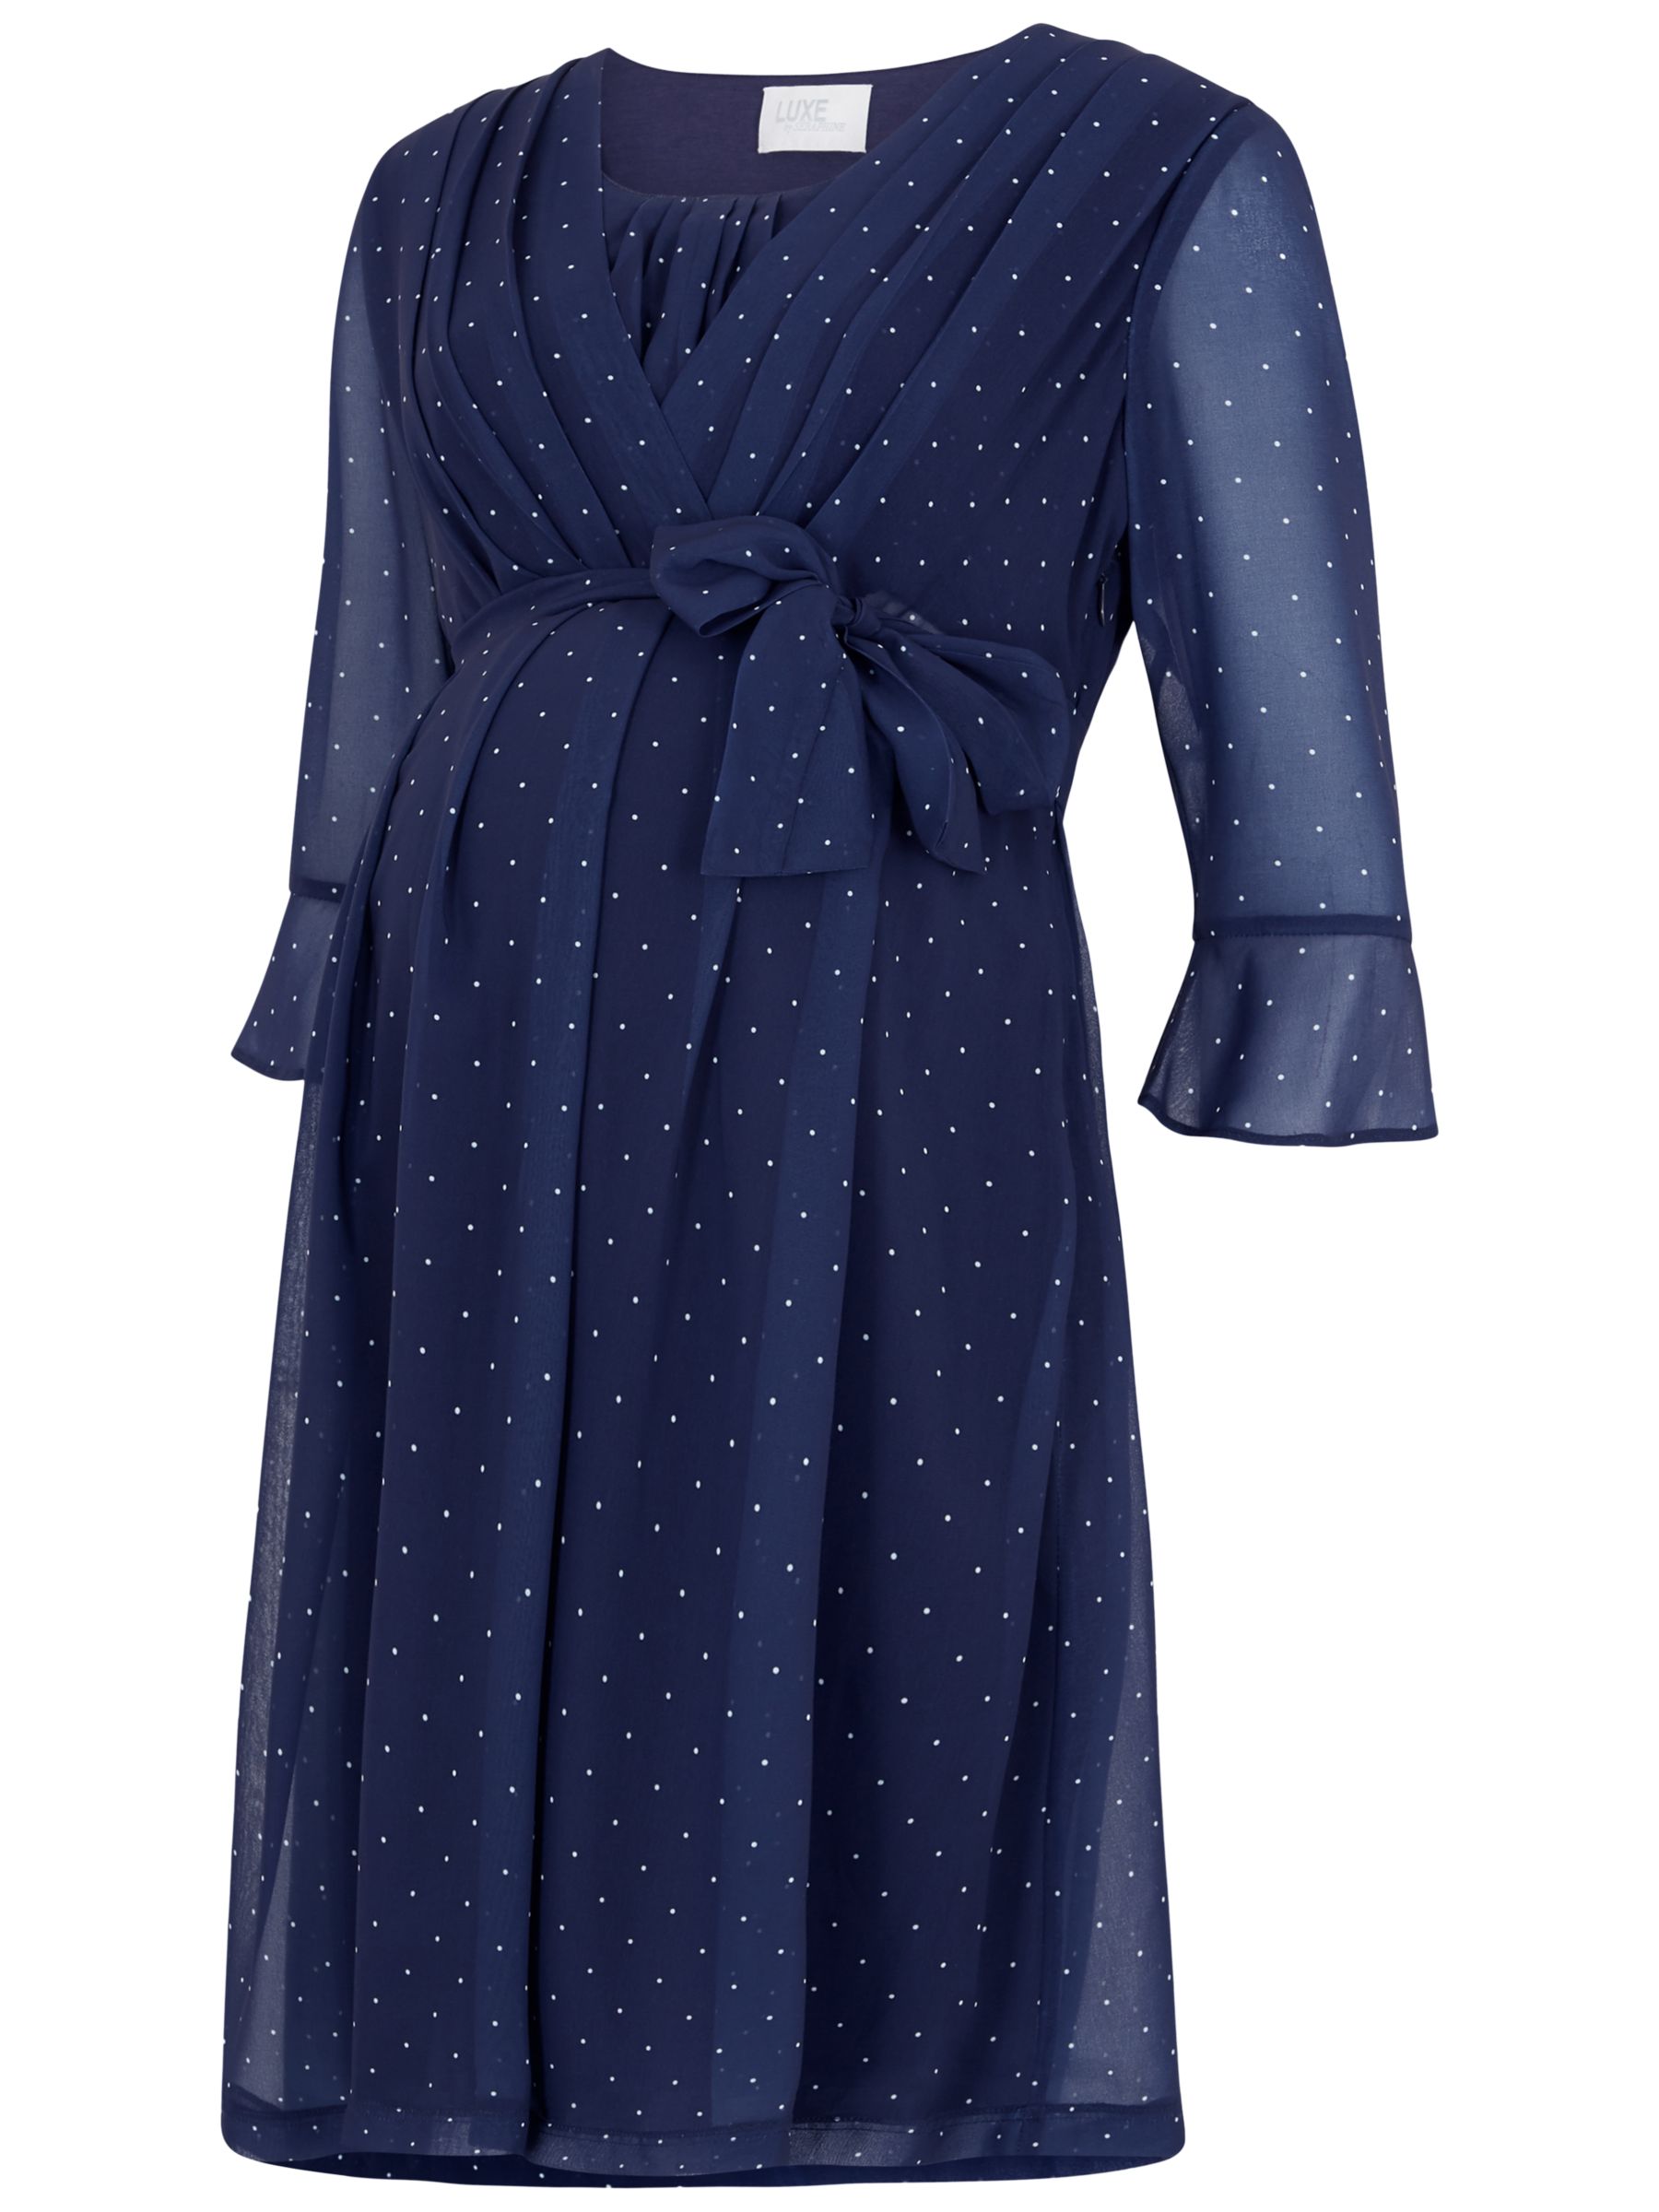 Séraphine Dorothea Dot Ruffle Sleeve Dress, Navy/Multi